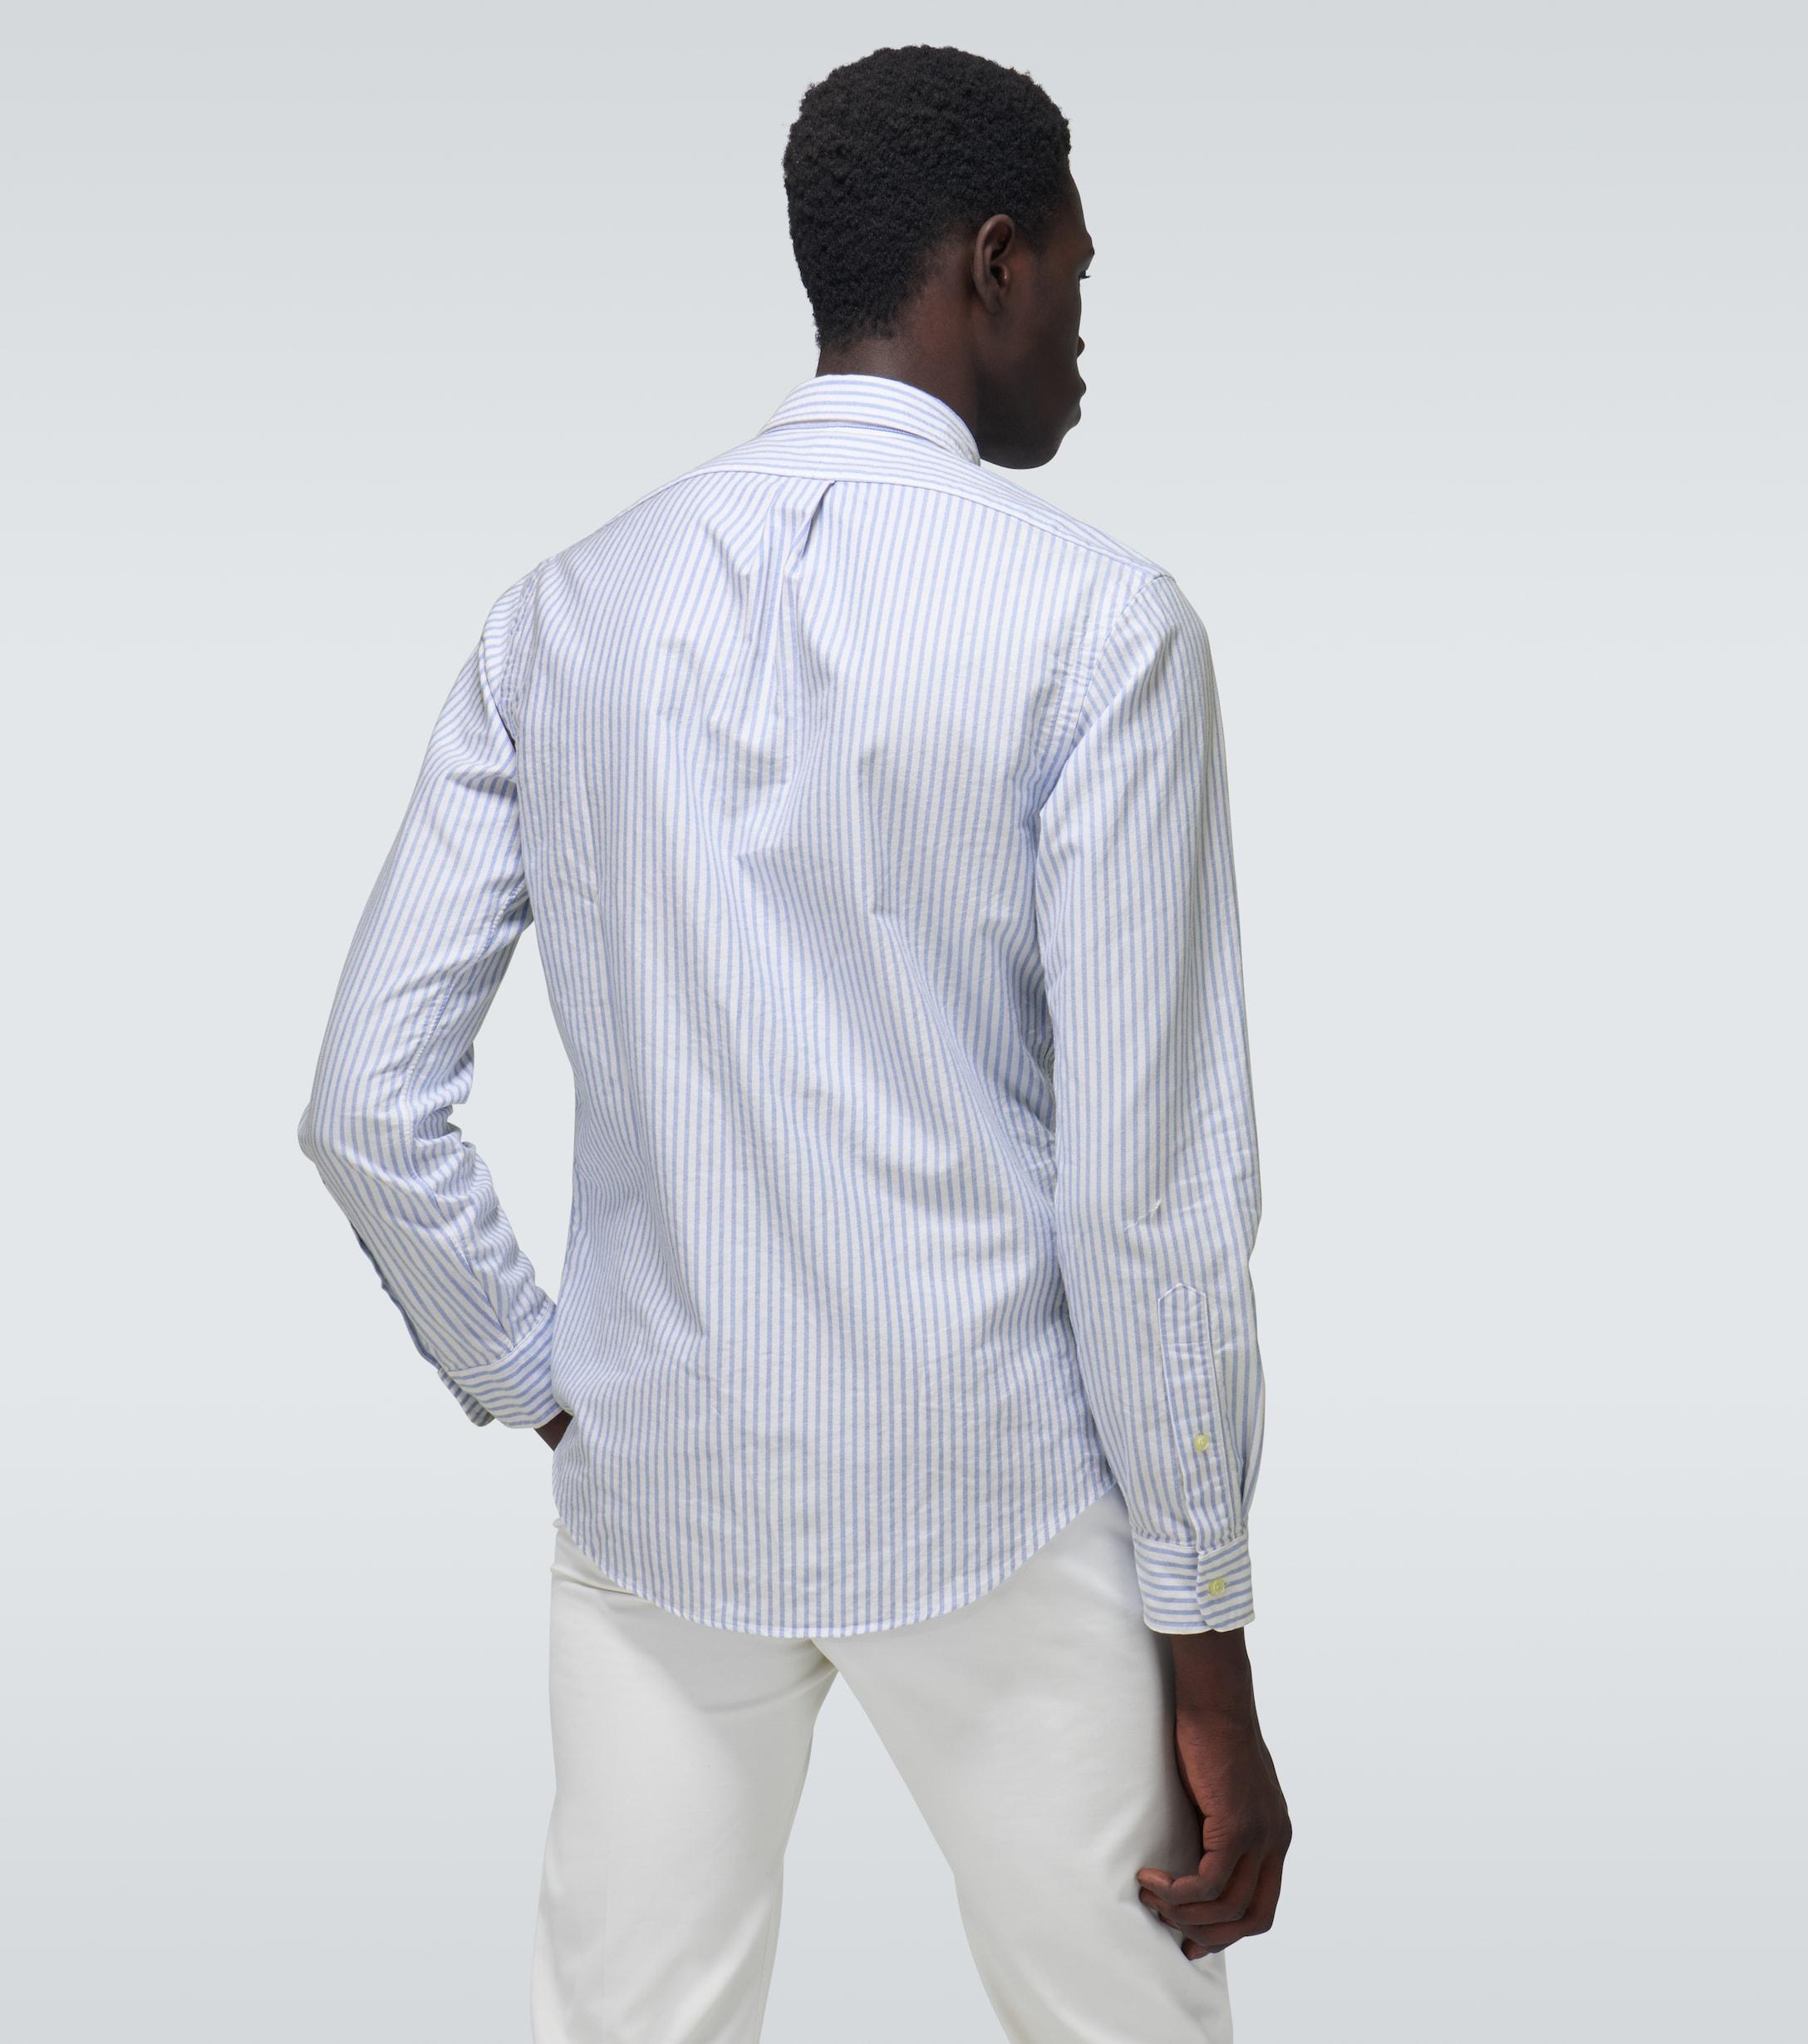 Polo Ralph Lauren Long-sleeved Striped Shirt in Blue for Men - Lyst